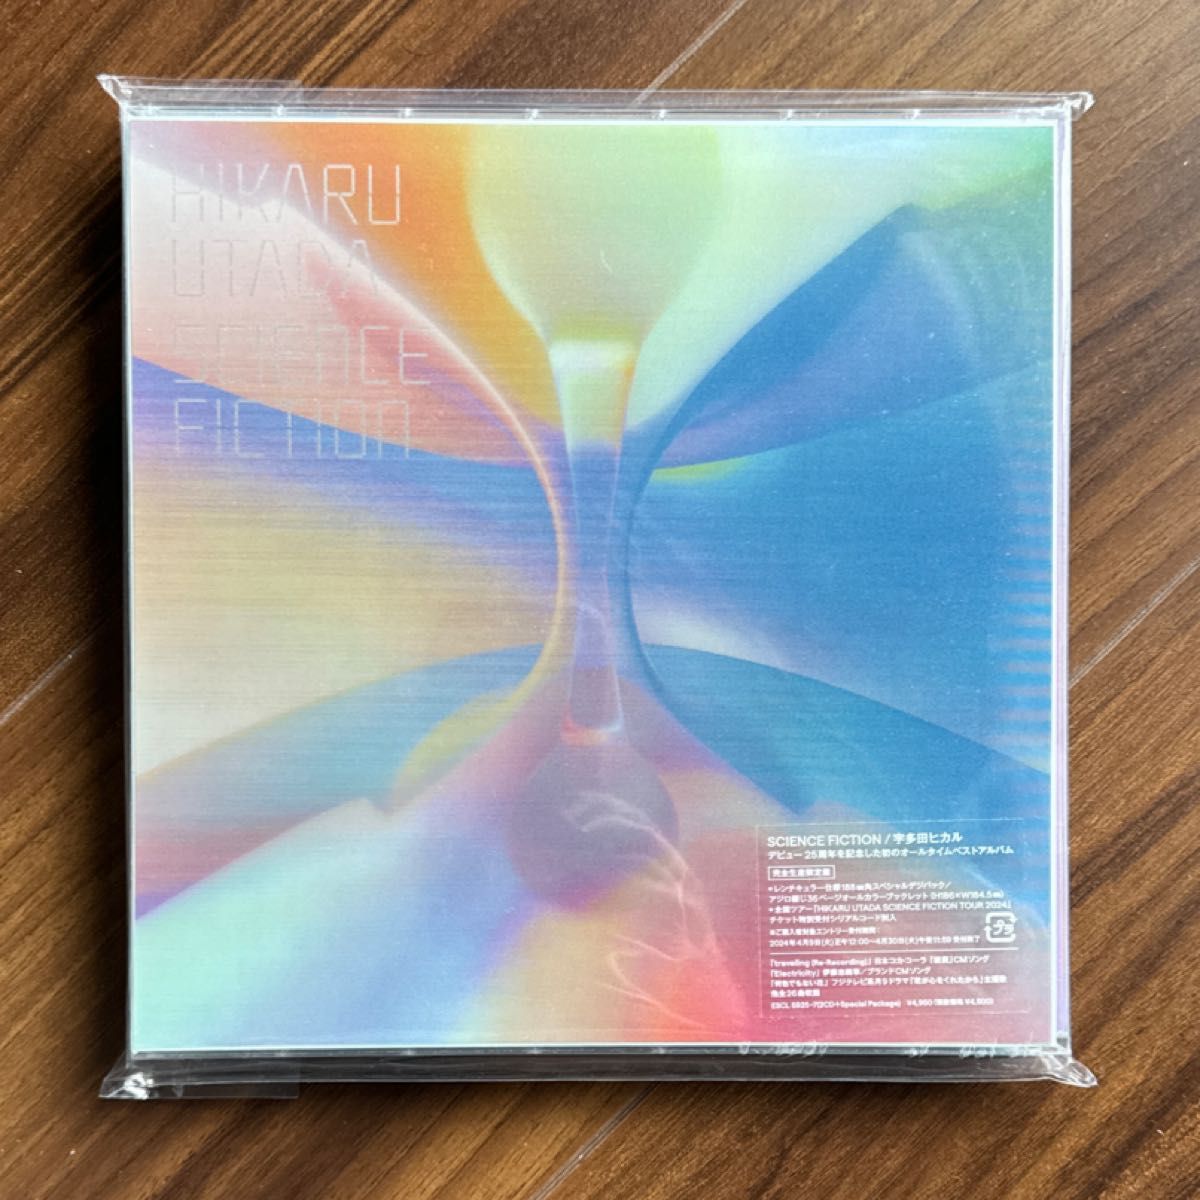 SCIENCE FICTION 宇多田ヒカル CD 